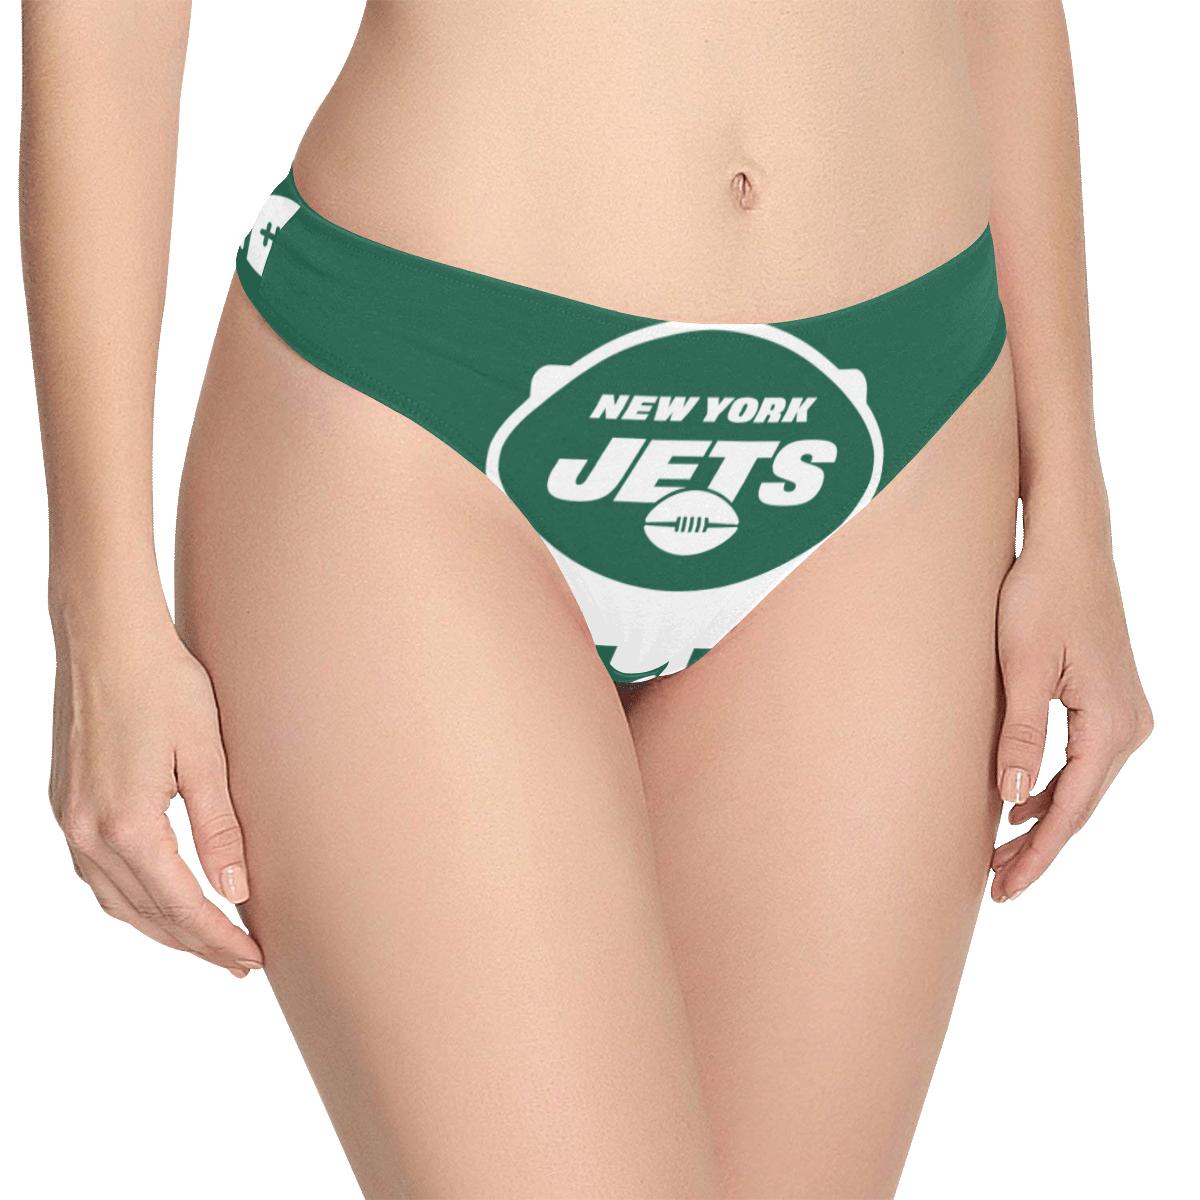 New York Jets Women’s Classic Thong – Model L5